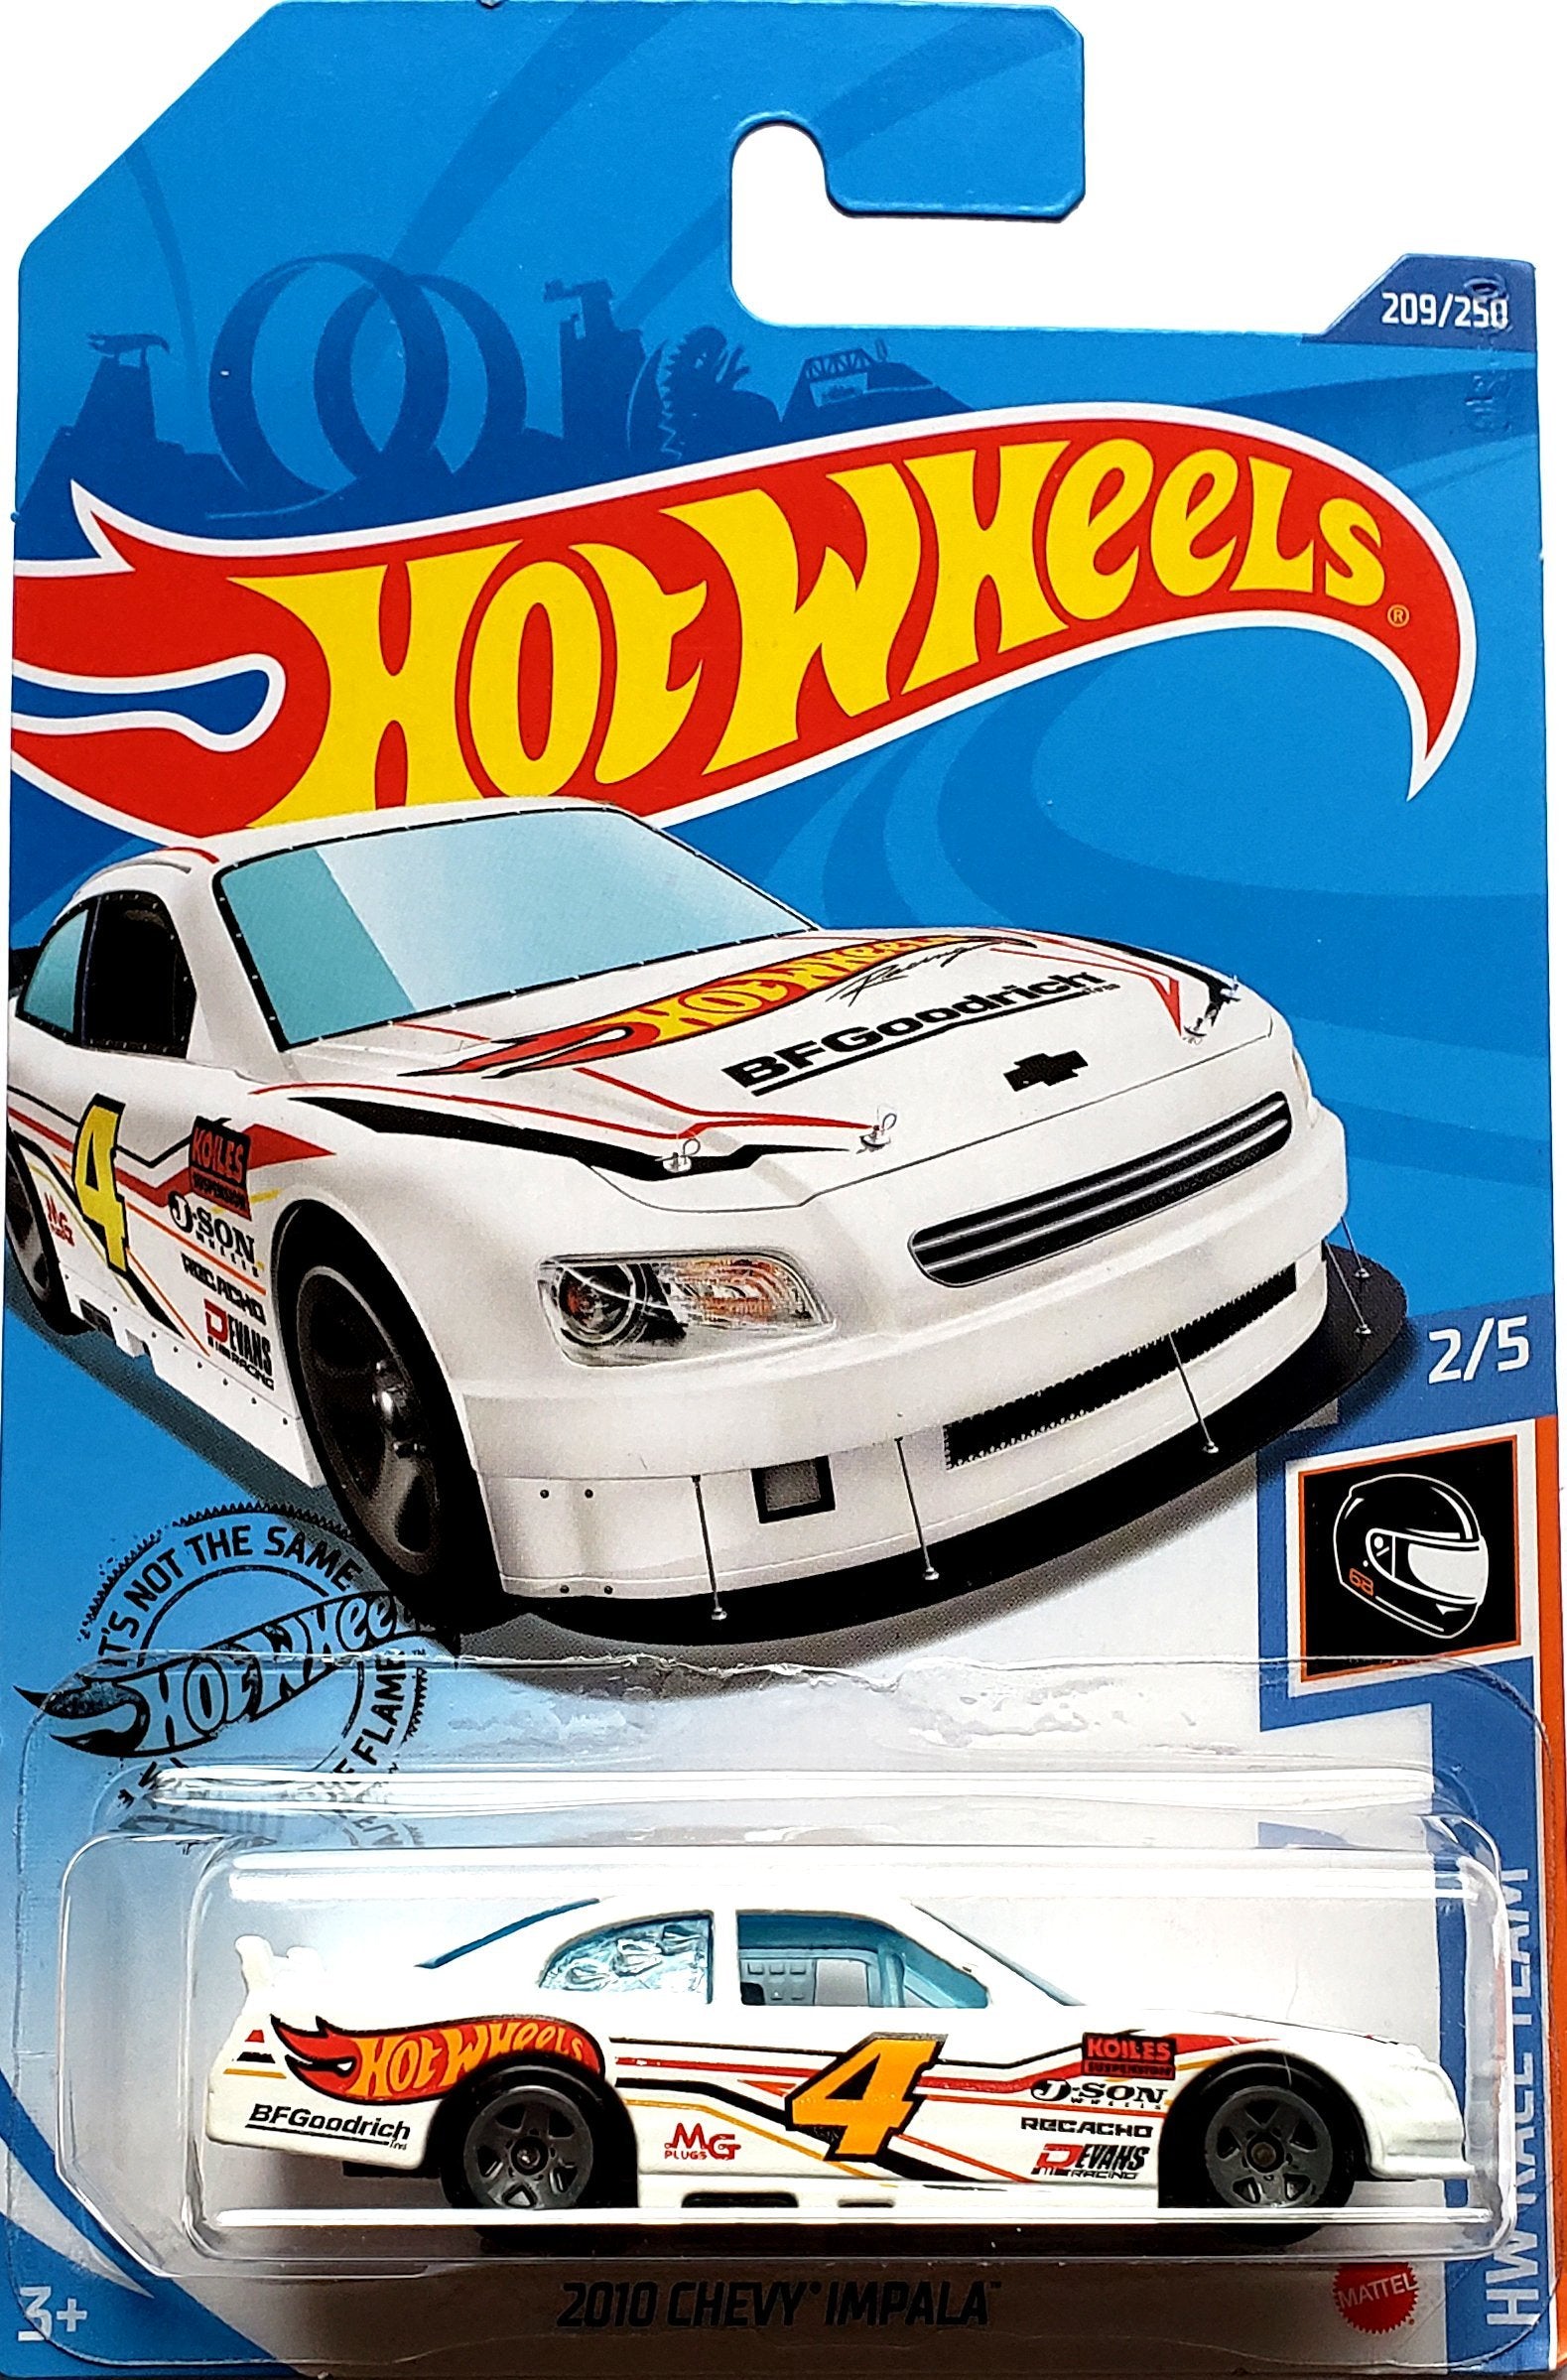 2020 Hot Wheels Mainline #209 - 2010 Chevy Impala NASCAR (White) GHF86